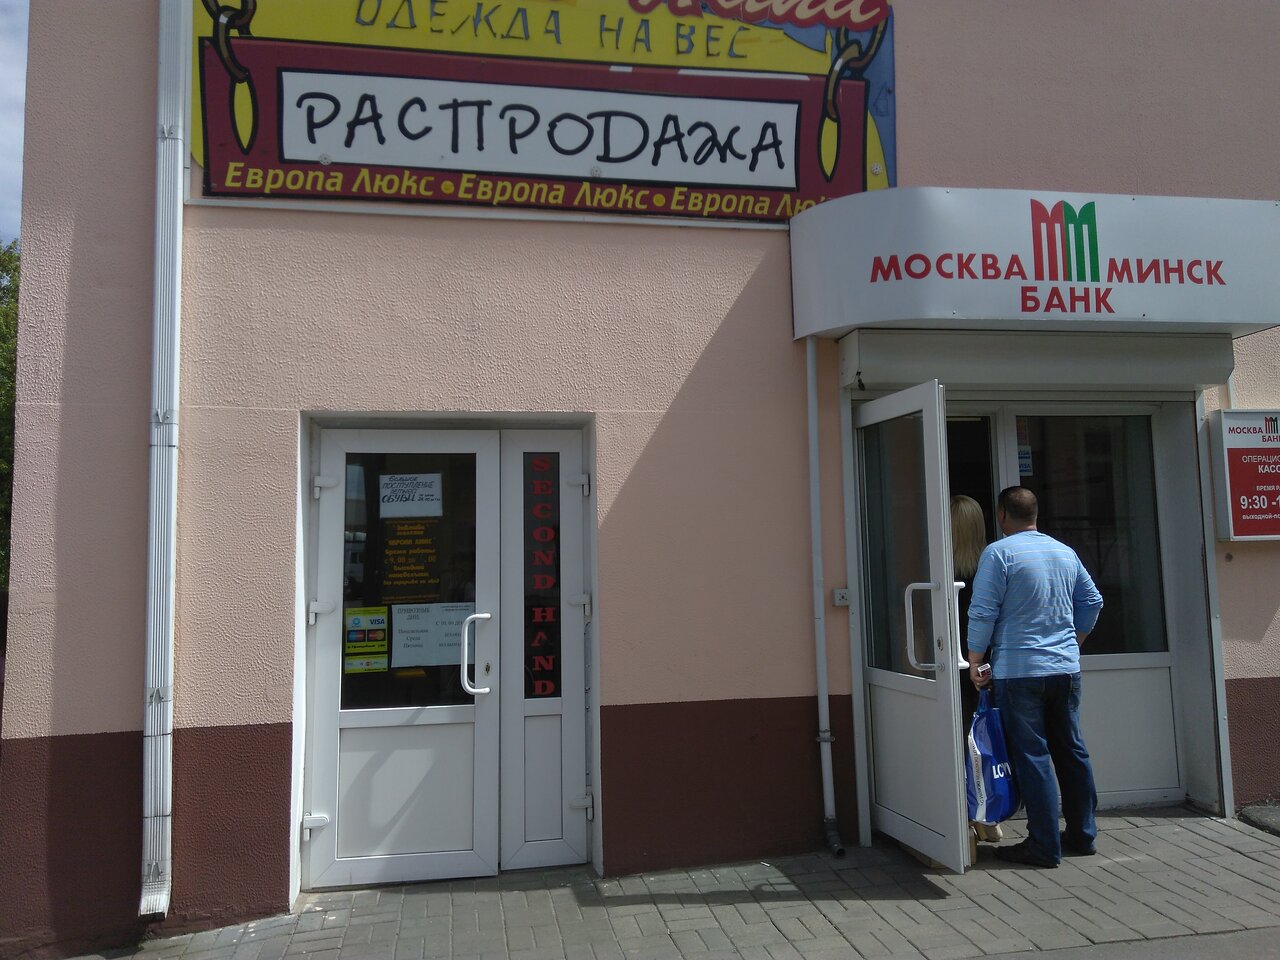 Минск москва банк обмен валют перевод your bitcoin address